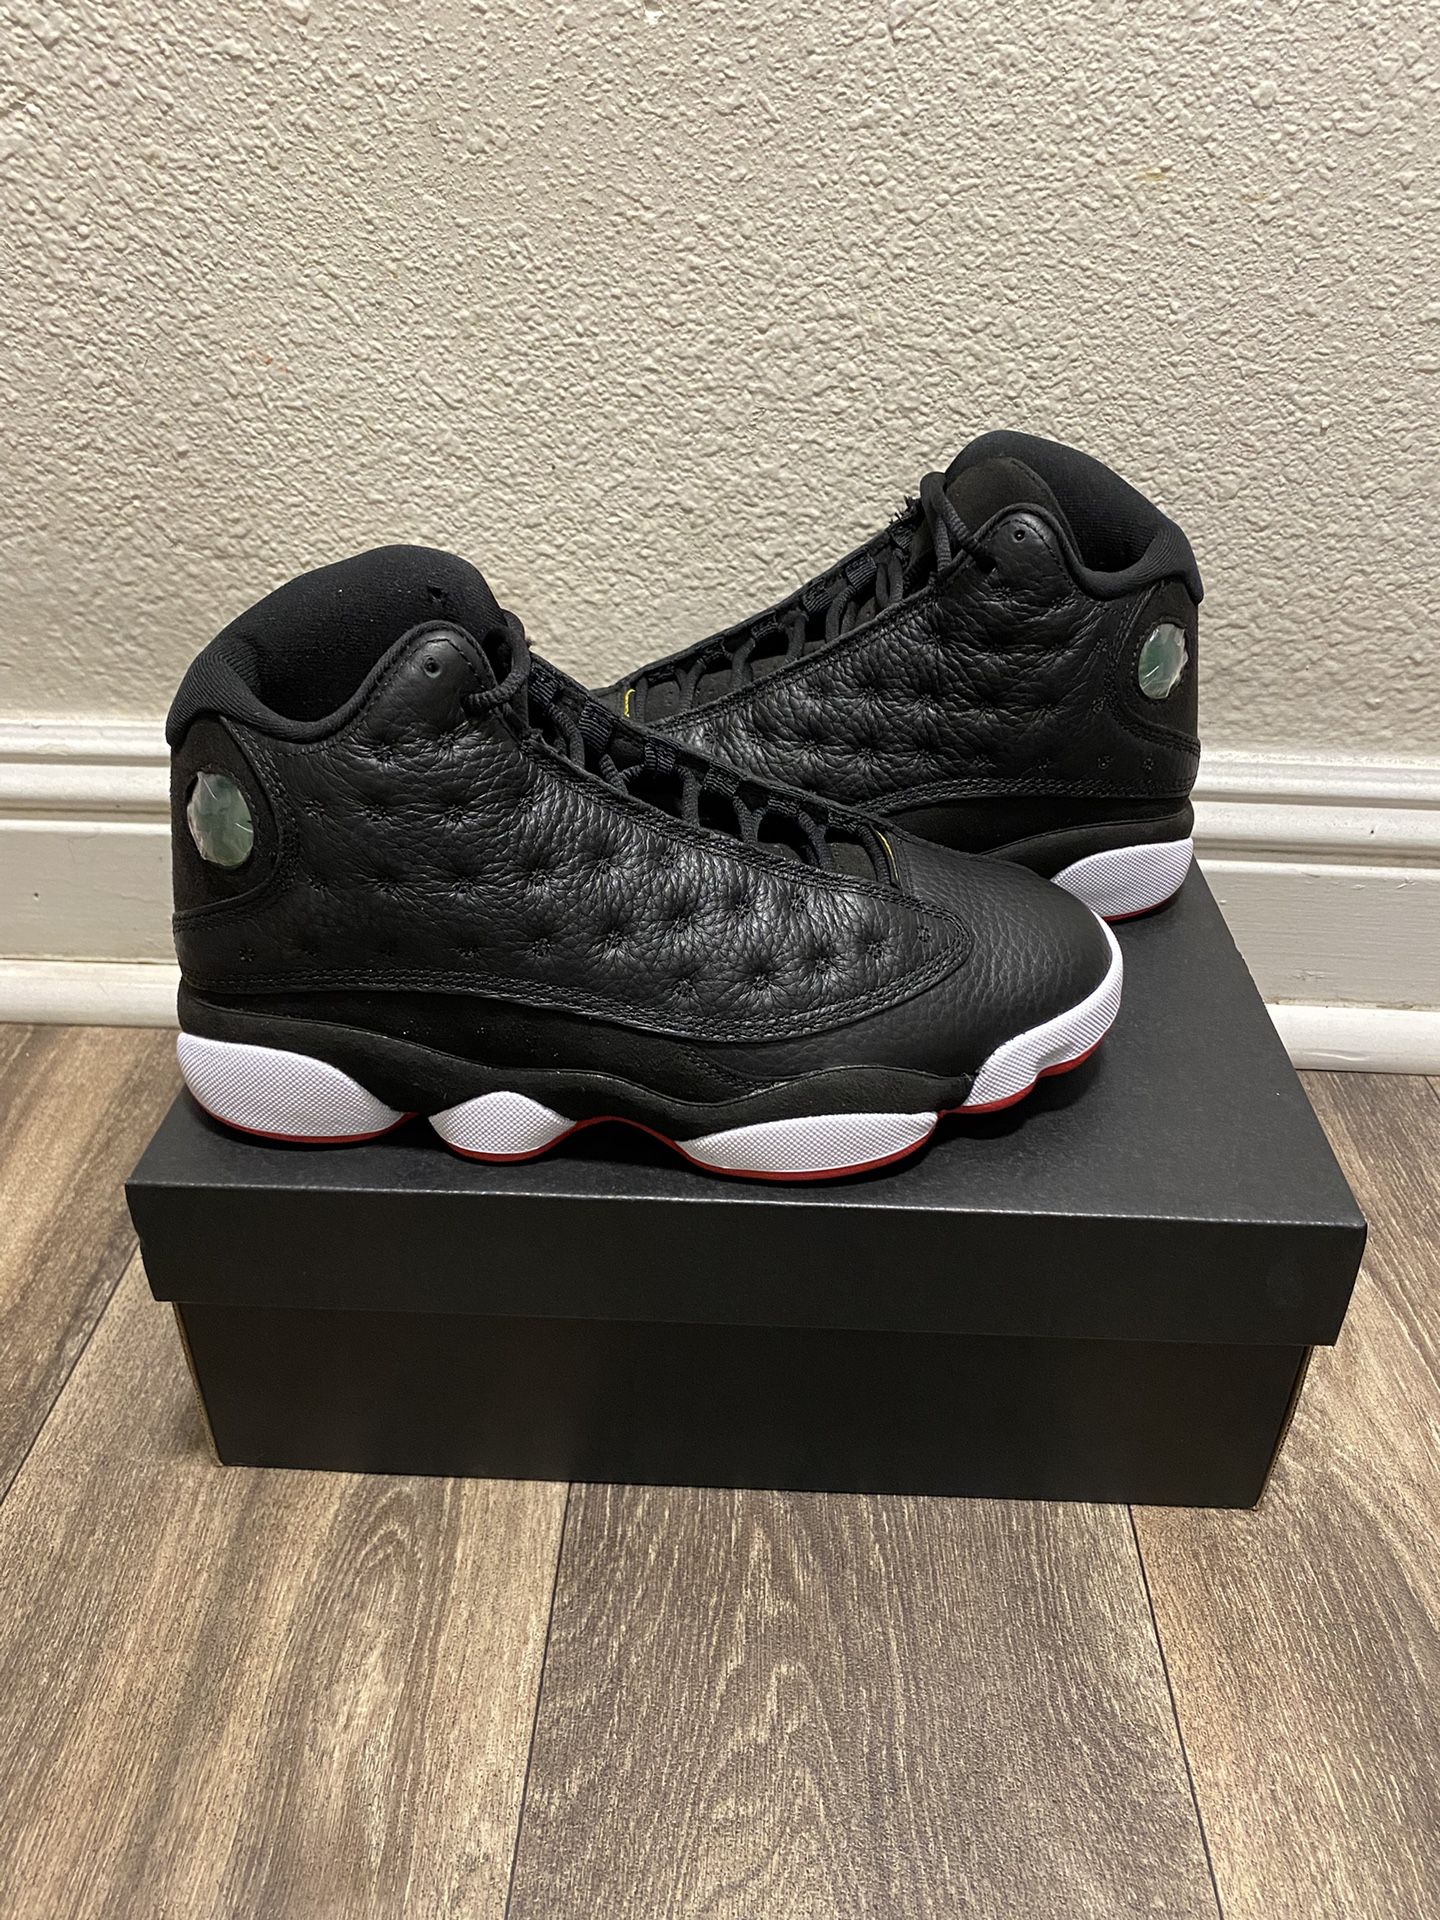 Brand New Jordan Retro 13 Size 5.5 for Sale in Las Vegas, NV - OfferUp